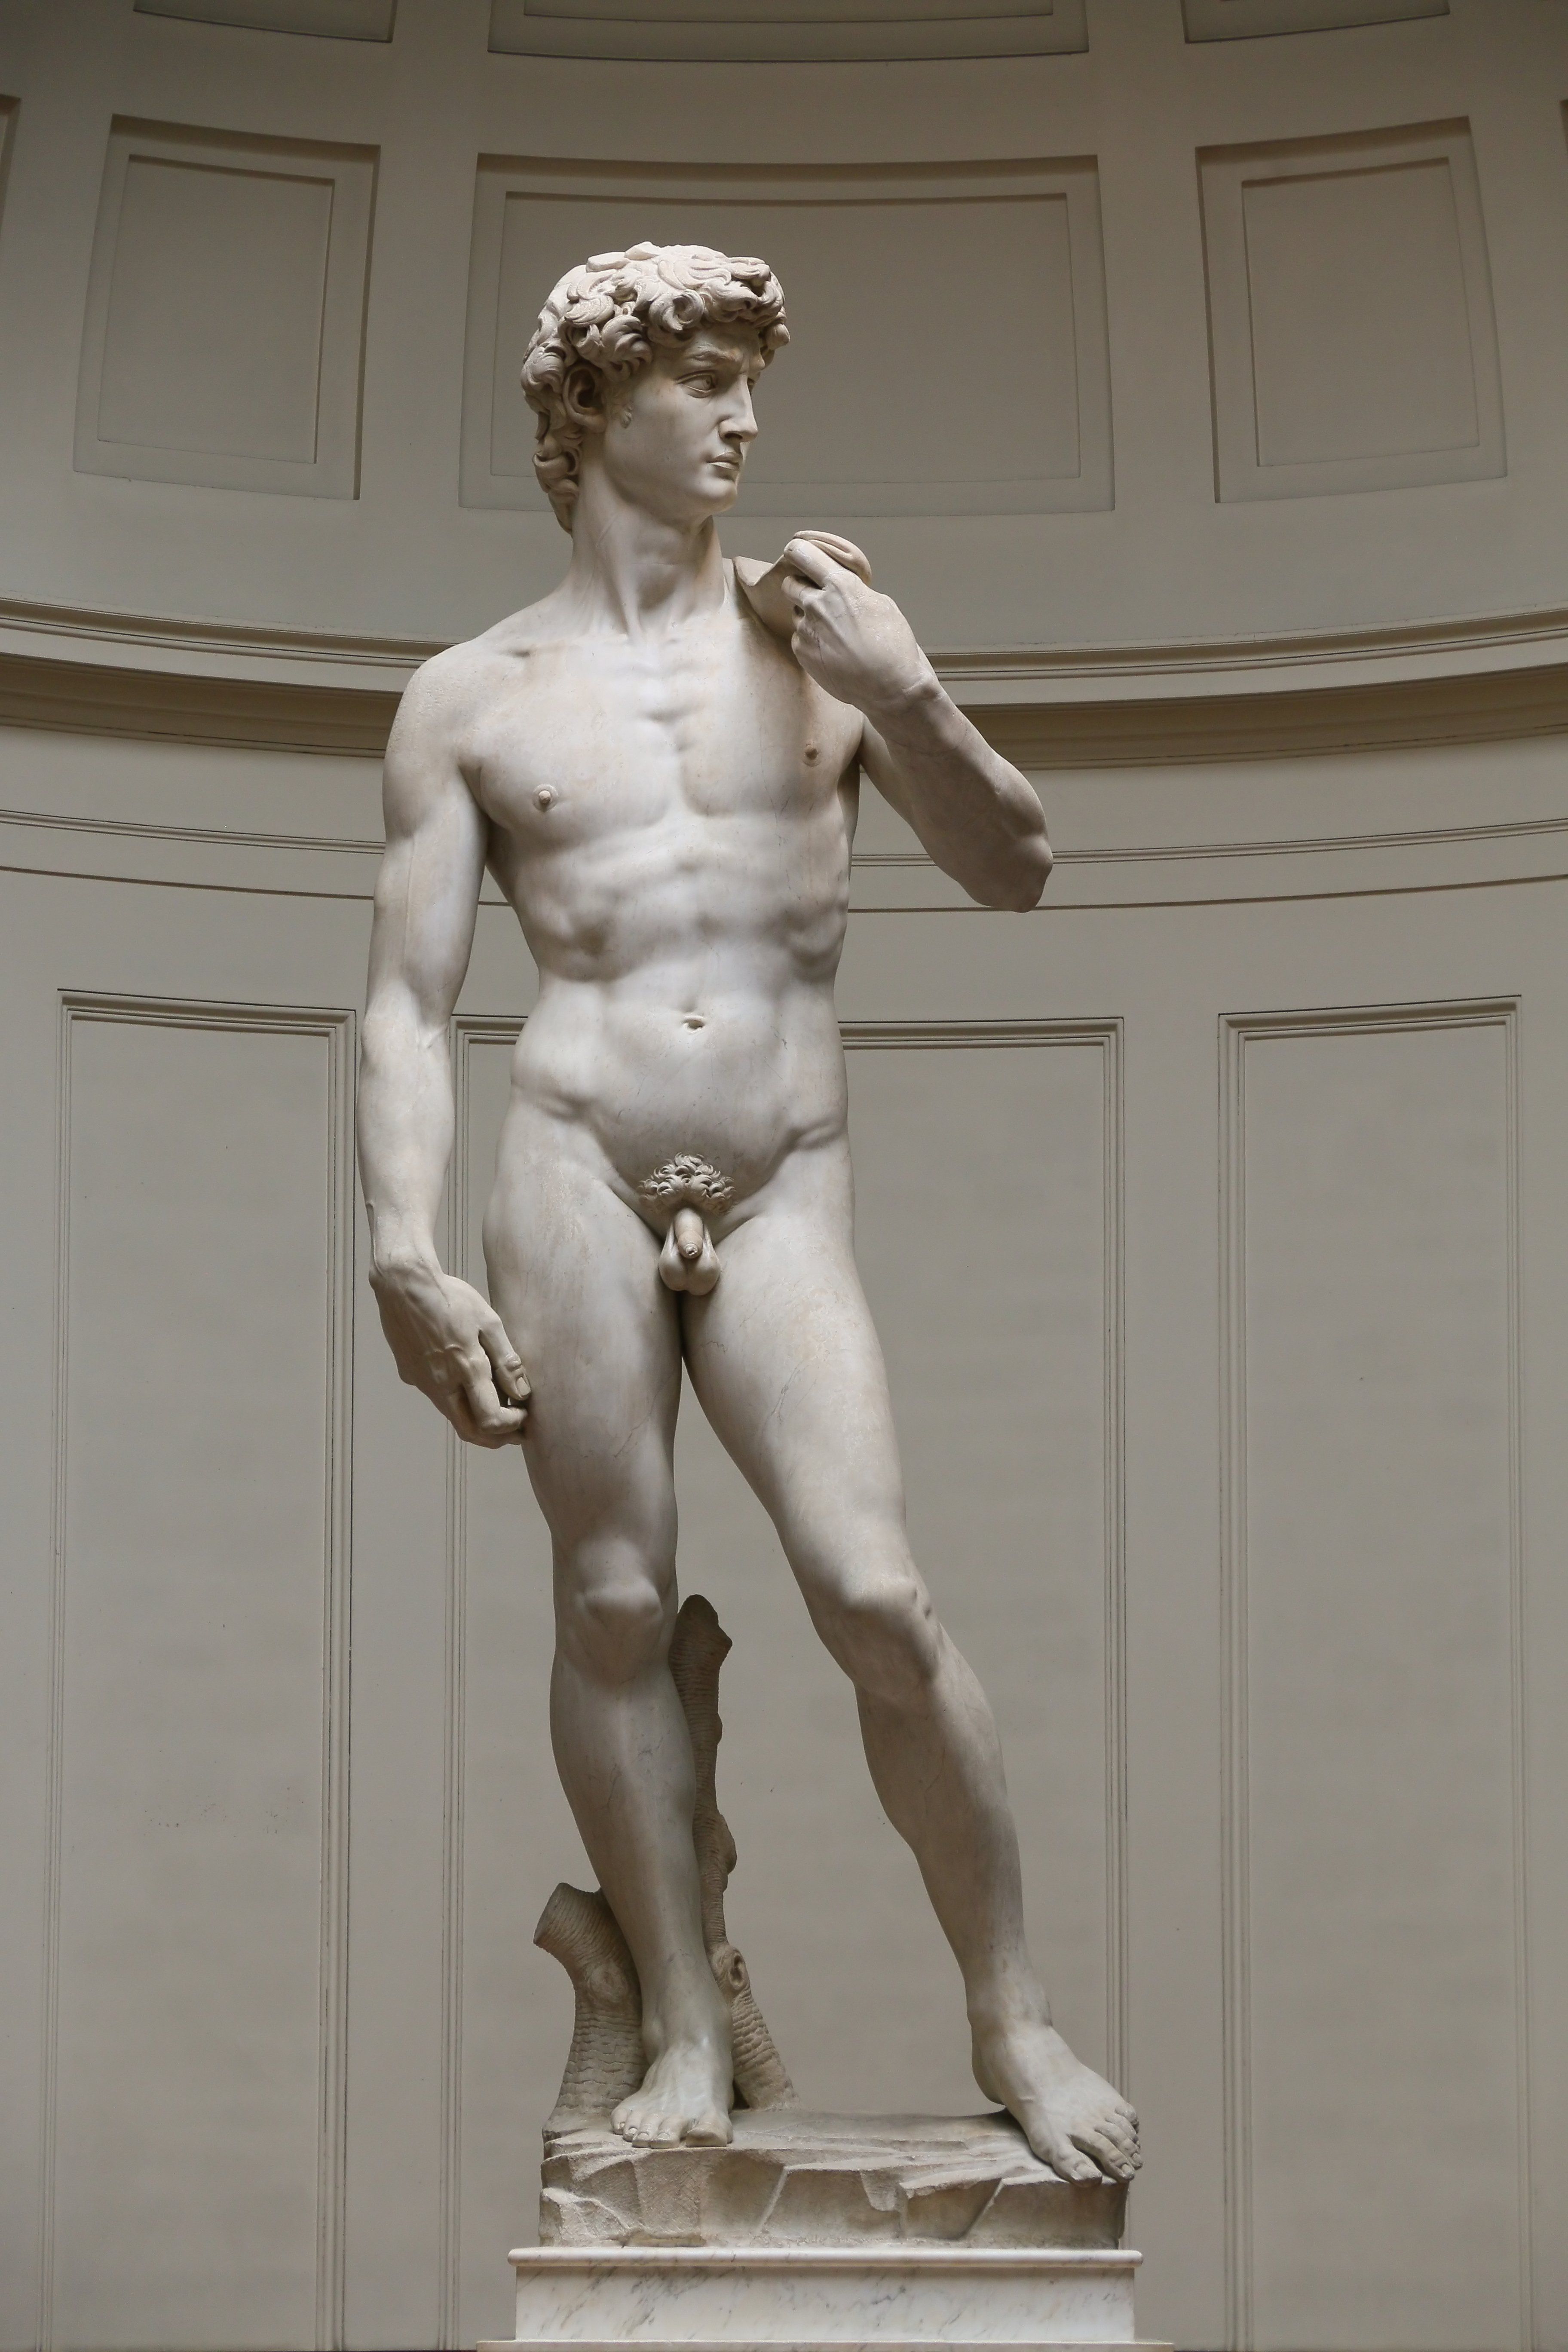 Statue of "David" by Michelangelo